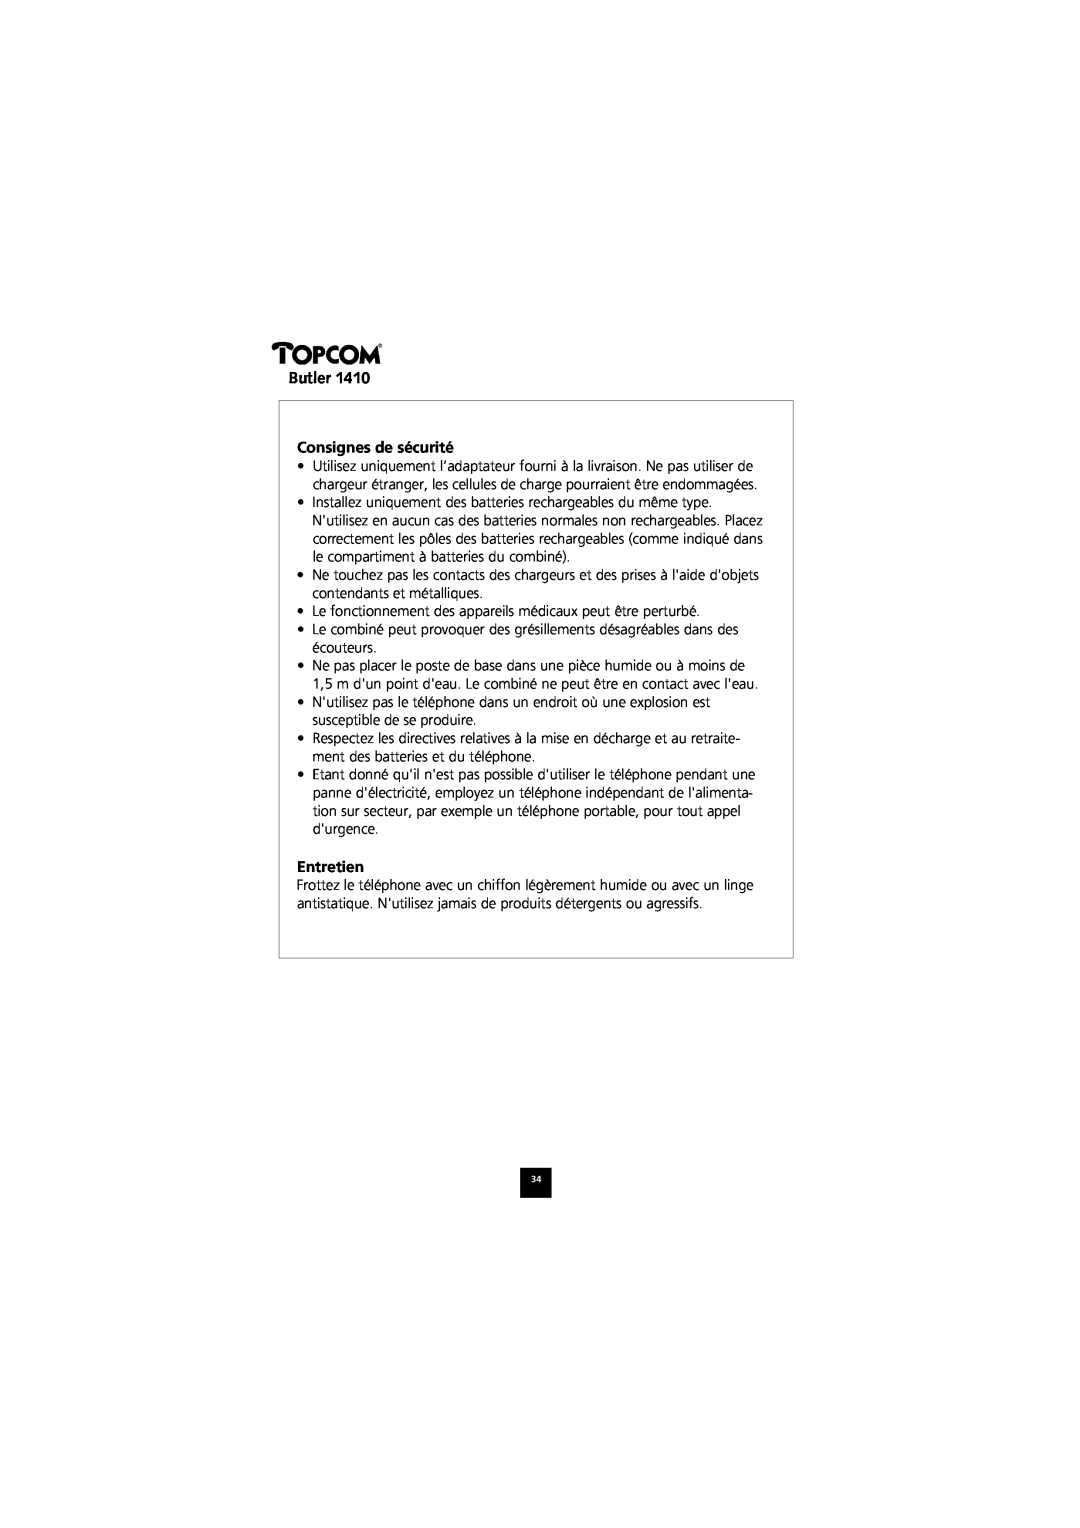 Topcom 1410 manual Consignes de sécurité, Entretien, Butler 